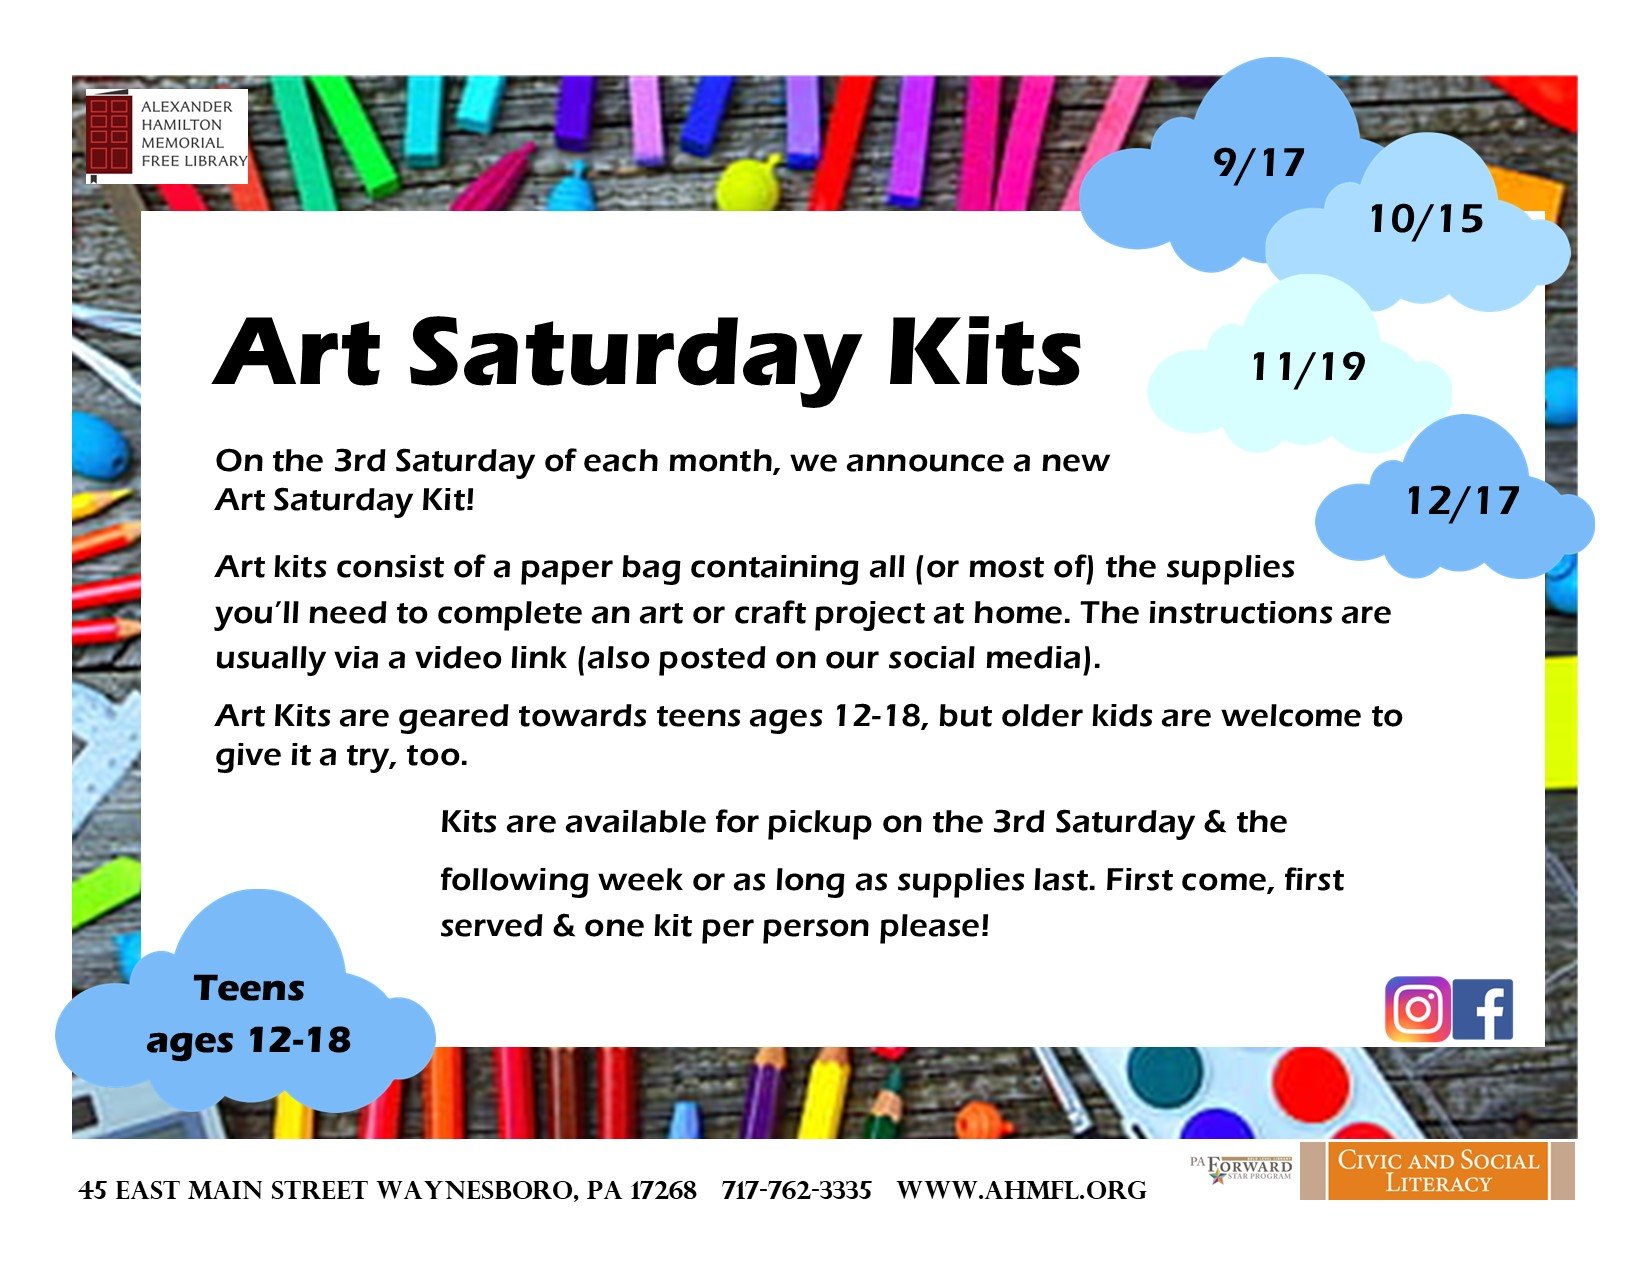 Art Saturday Kits — Alexander Hamilton Memorial Free Library